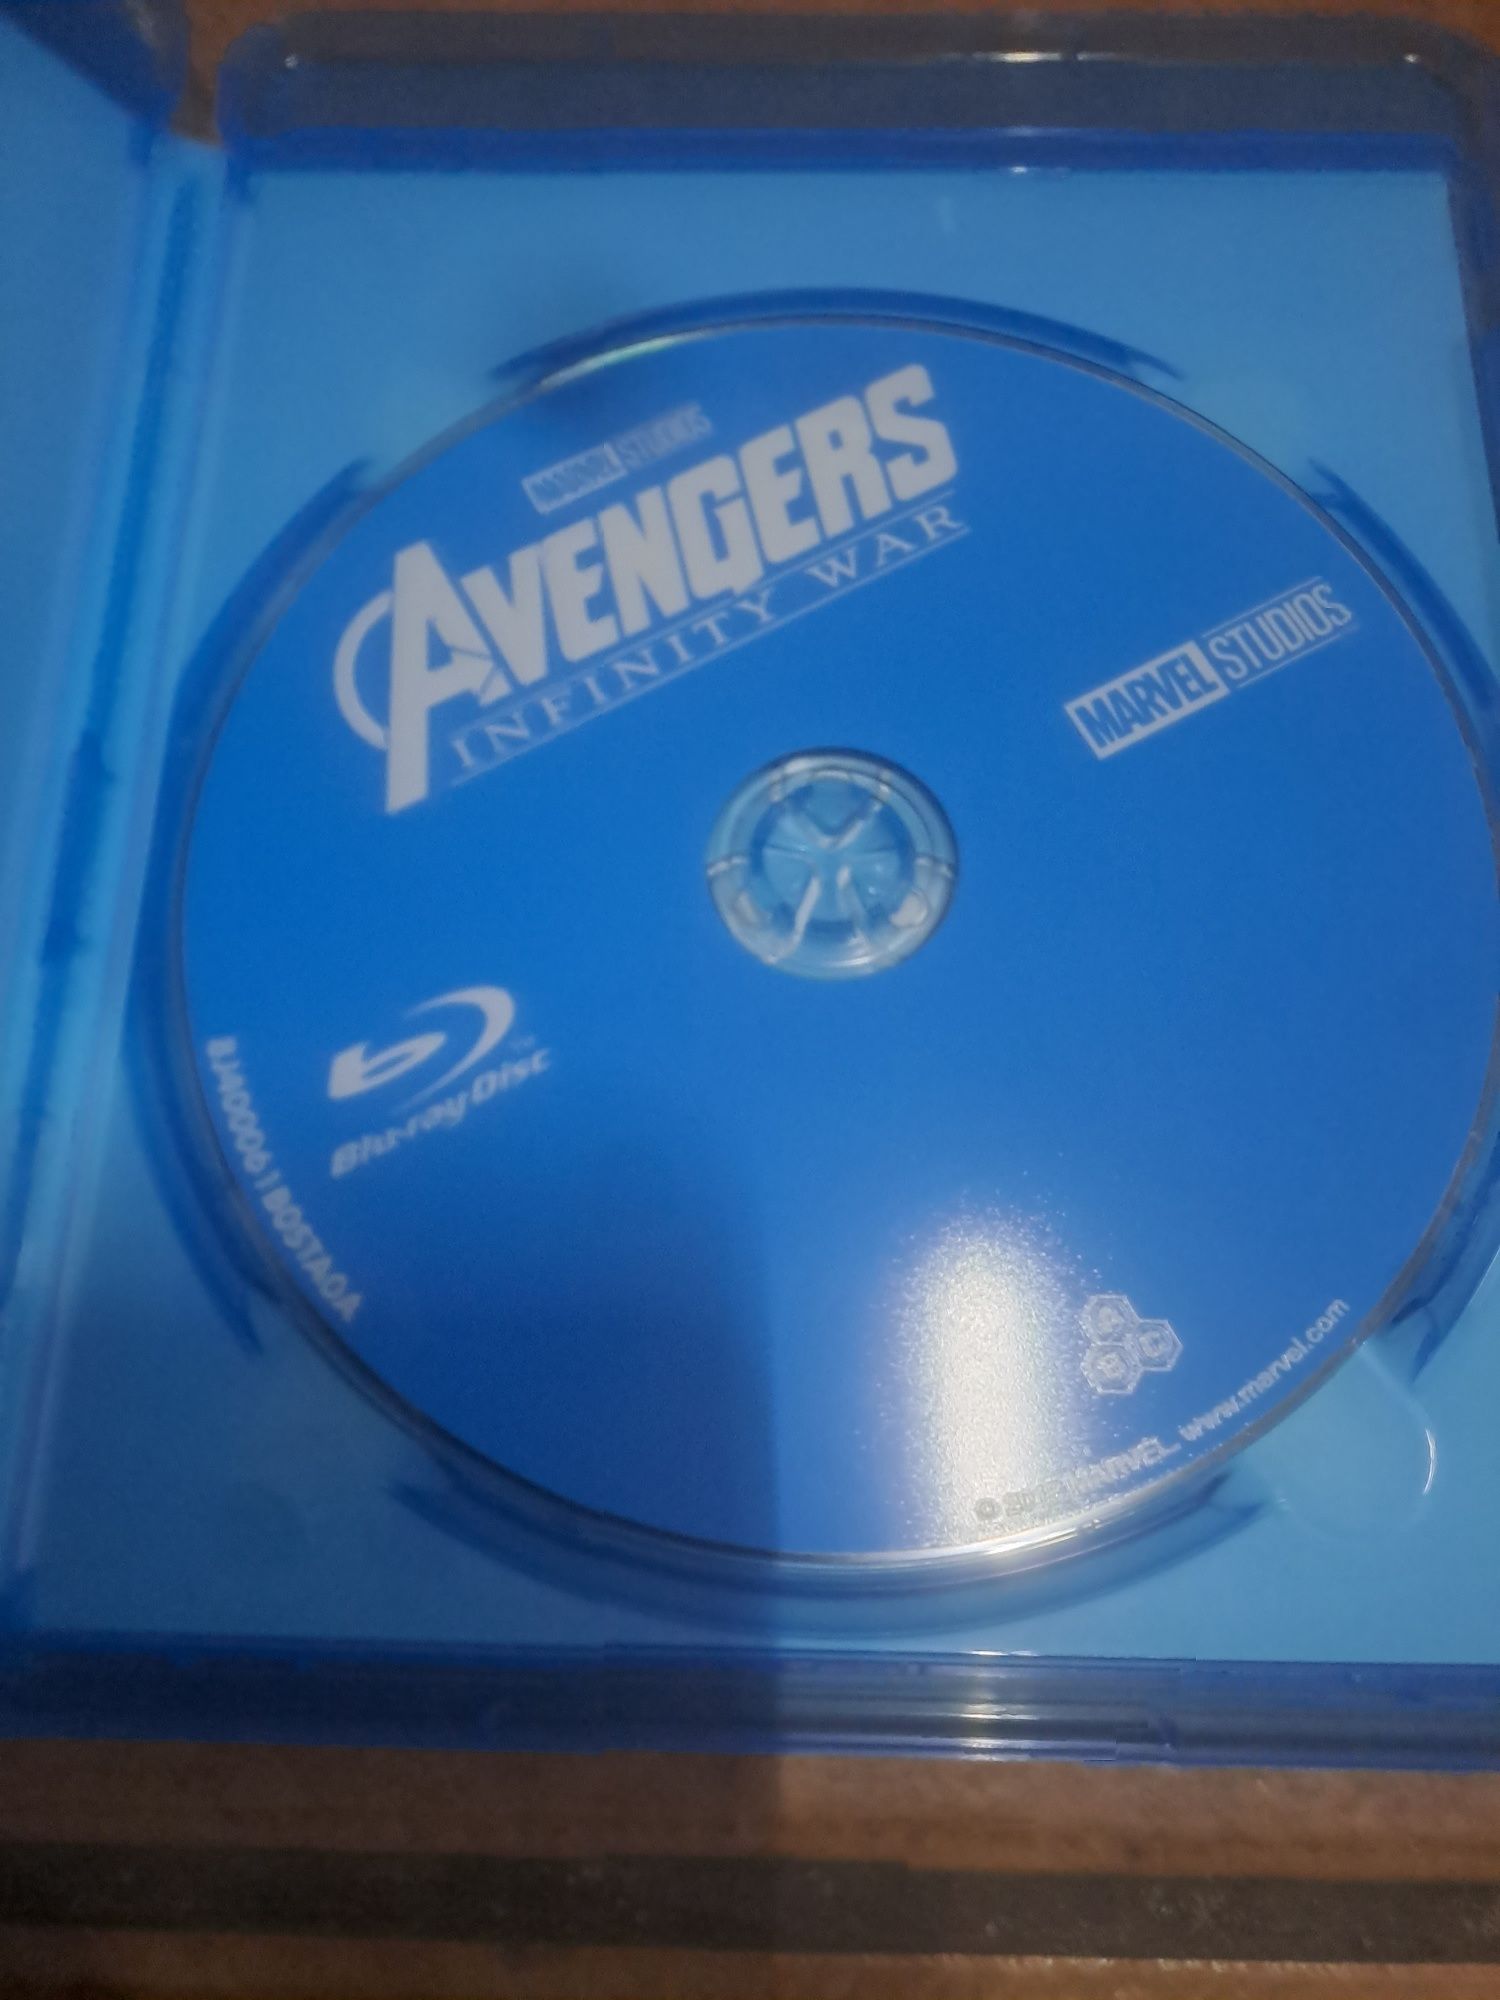 Avengers Wojna bez granic - Blu-Ray